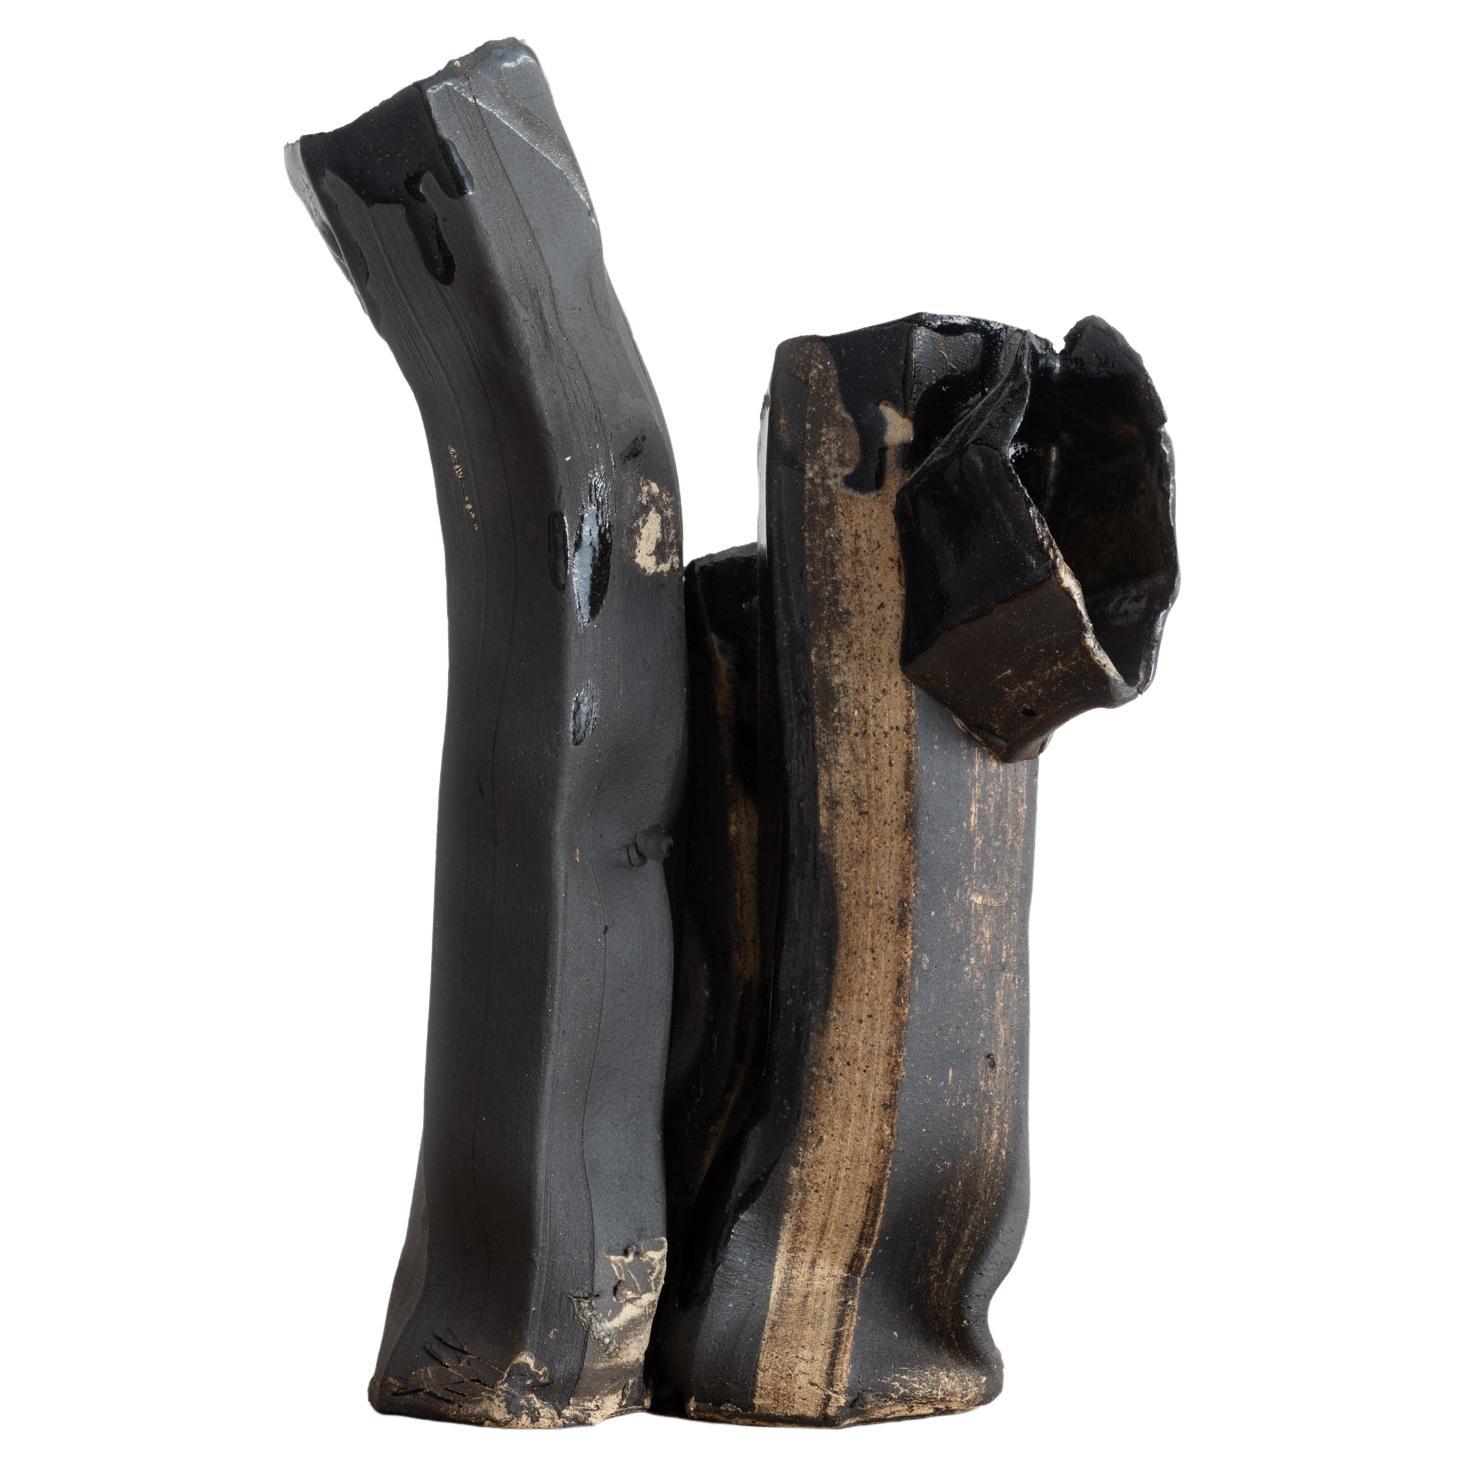 One-of-a-Kind Contemporary Sculptural Vase in Black & Tan Speckled Ceramic